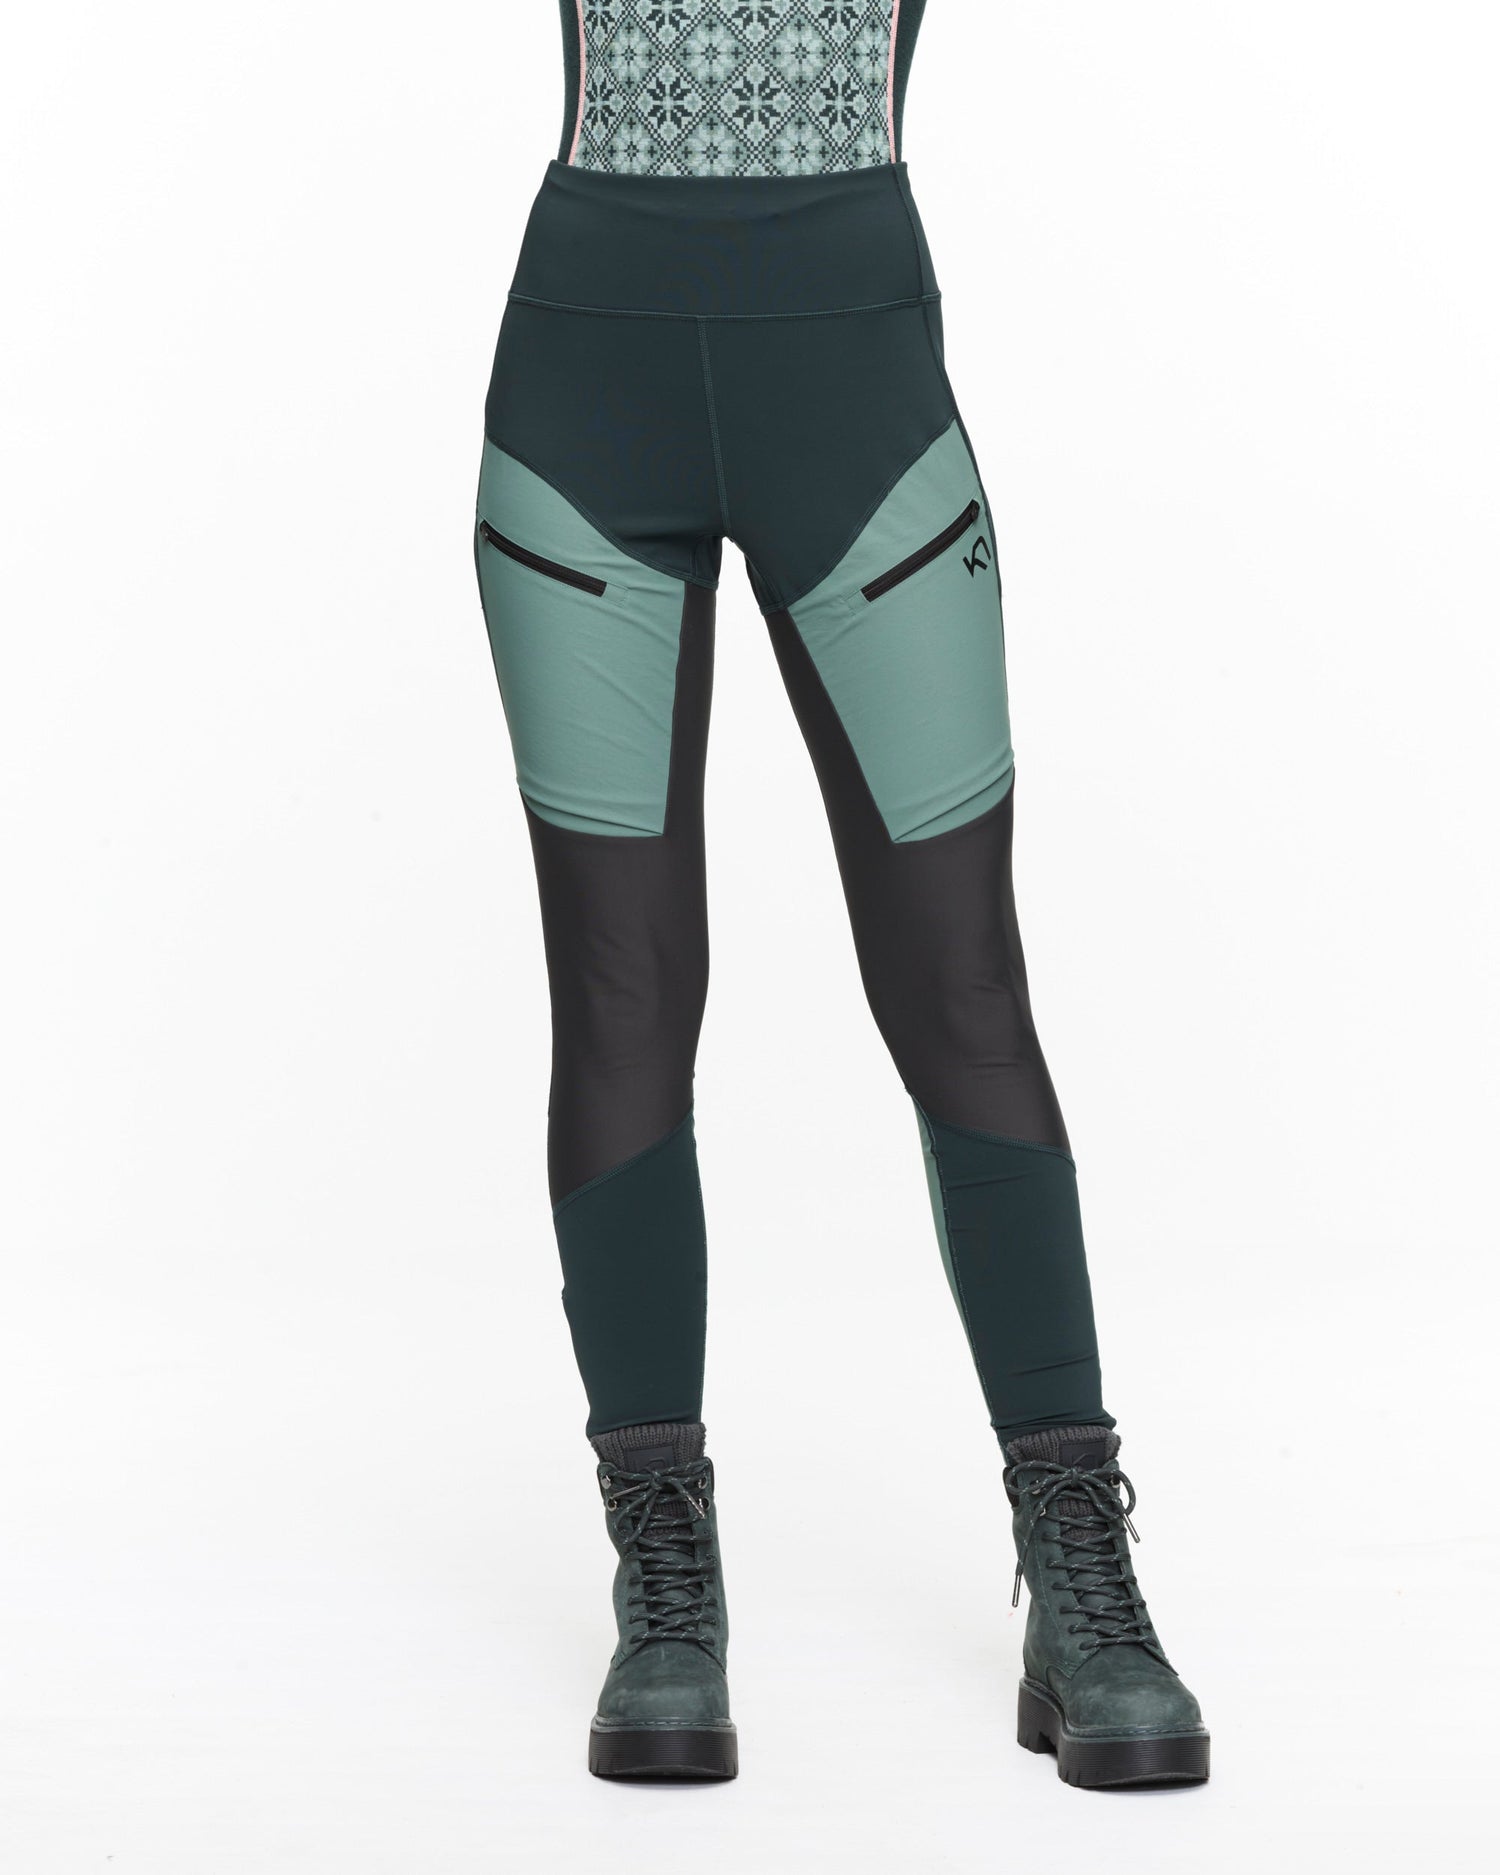 Kari Traa - W's Ane Hiking Tights - Recycled Polyamide - Weekendbee - sustainable sportswear